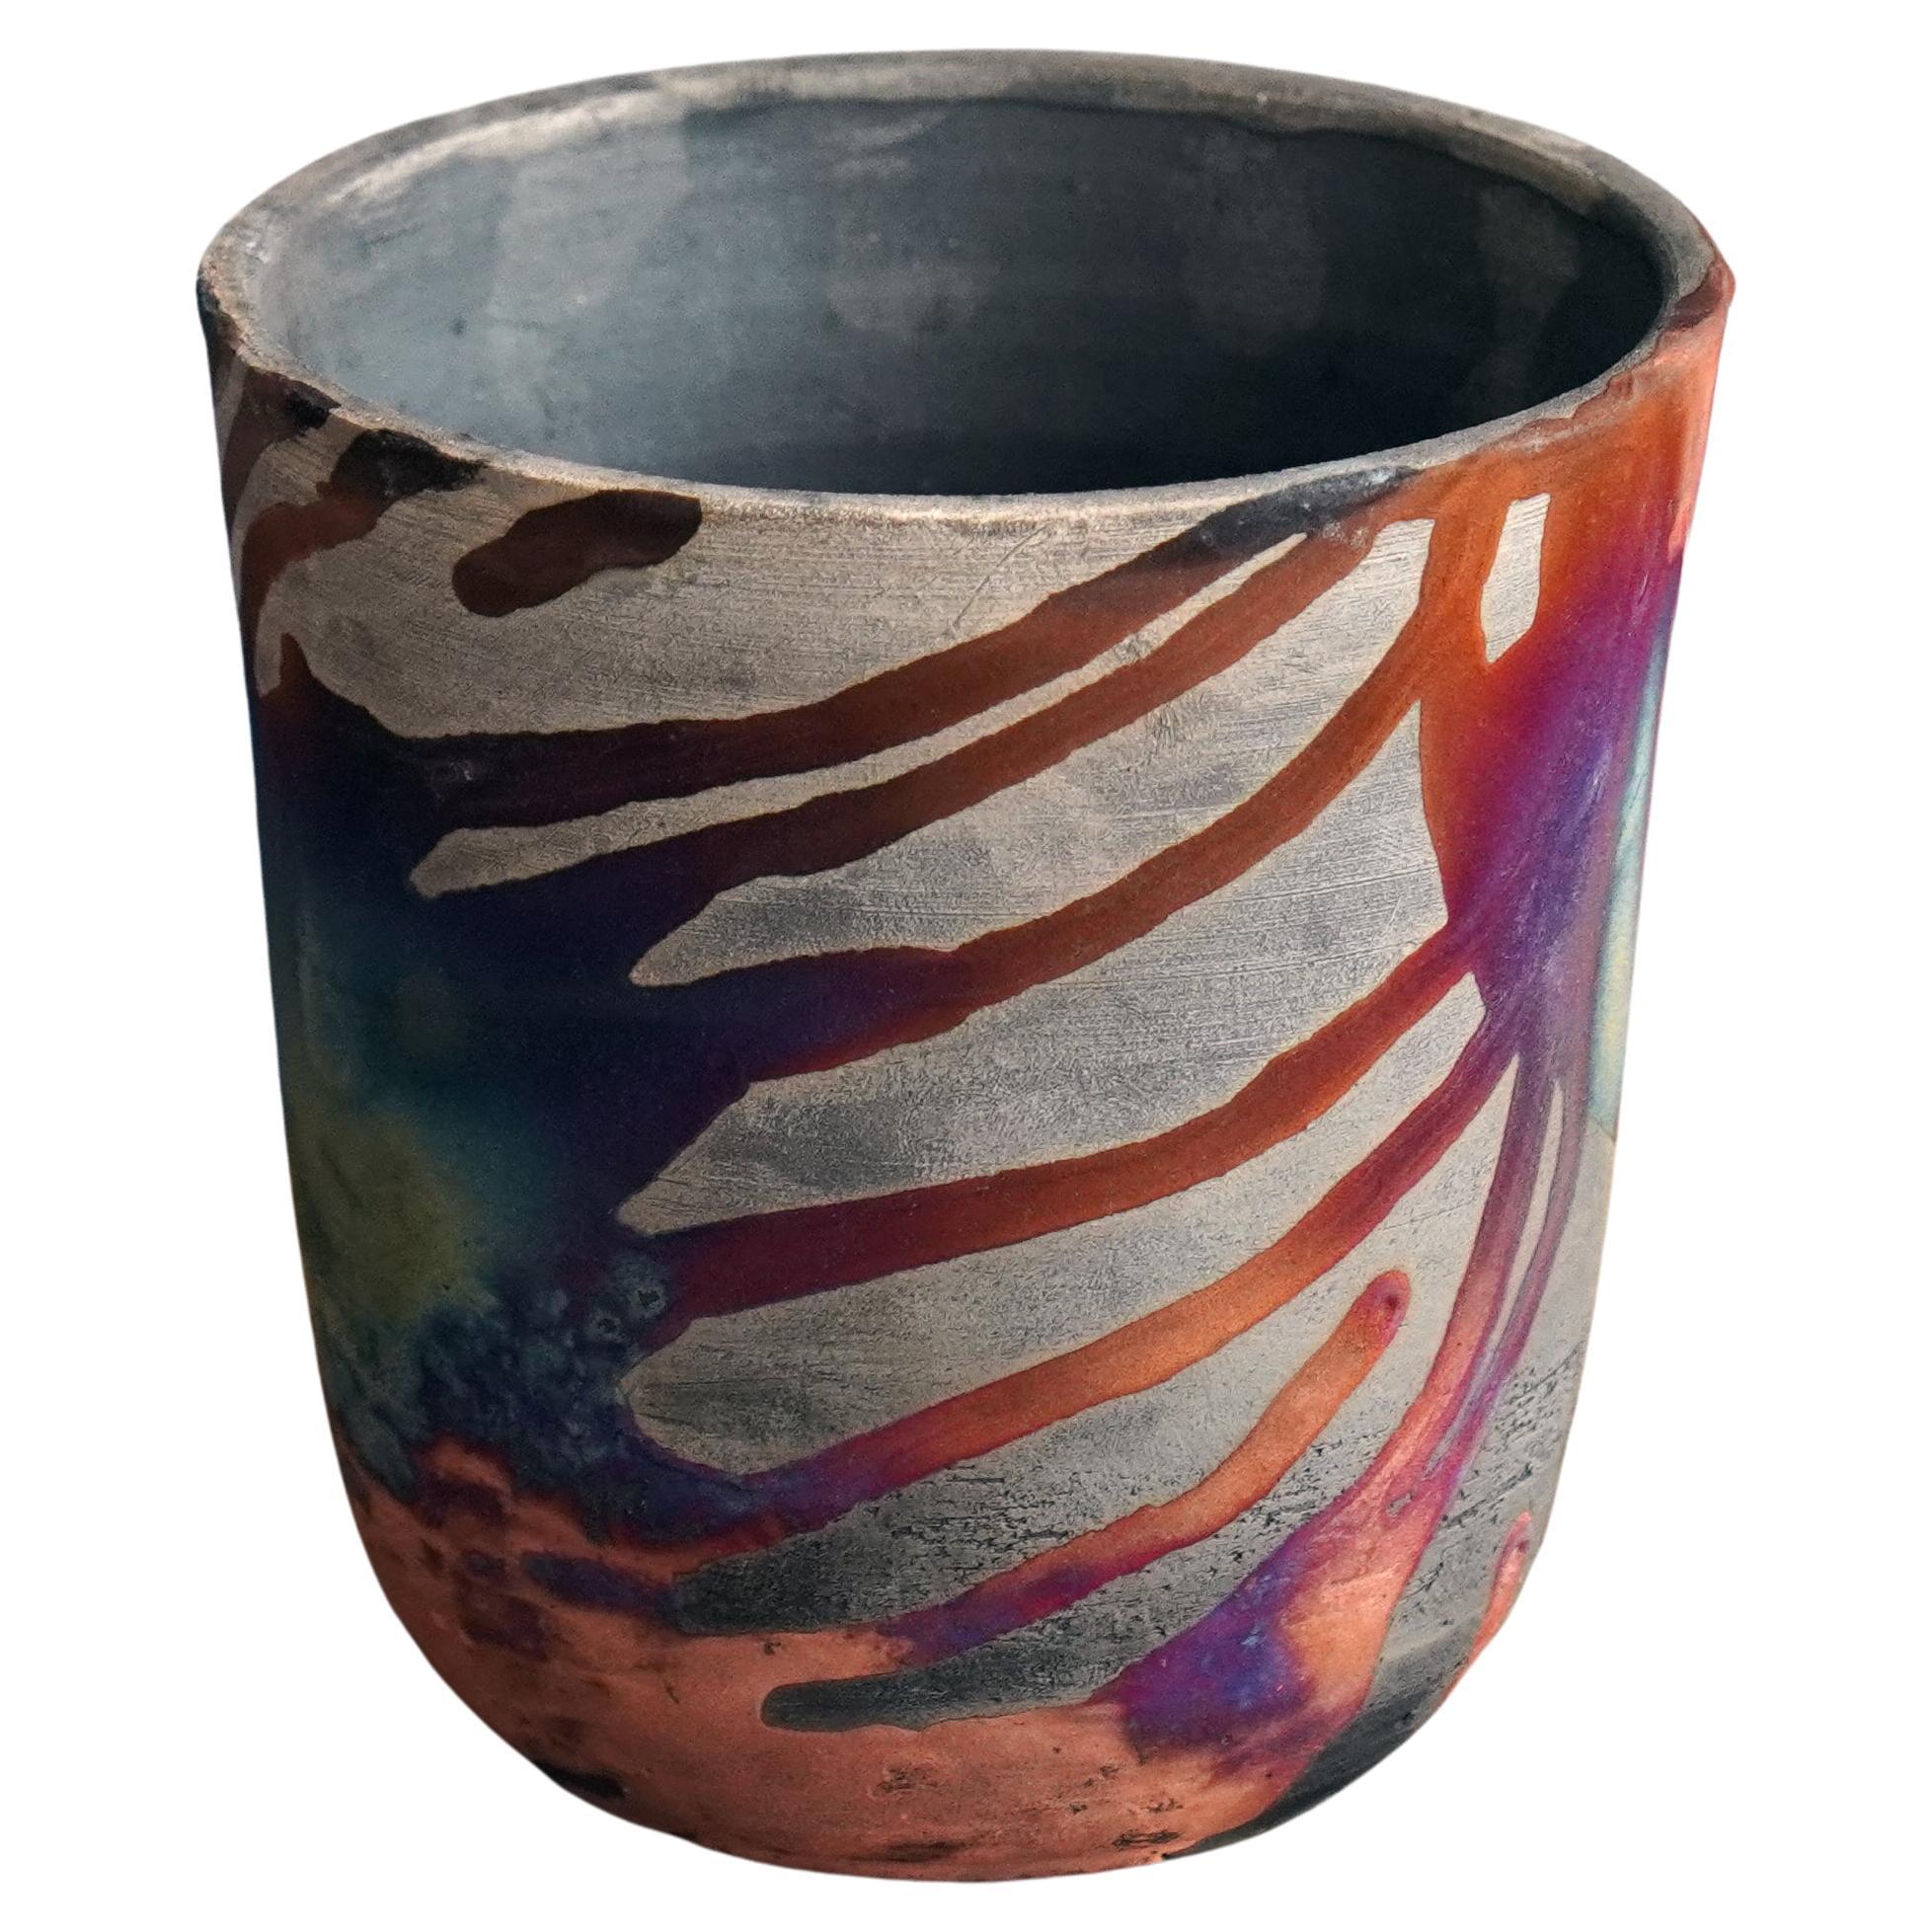 Shinsen Raku Pottery Vase - Carbon Copper - Handmade Ceramic Home Decor Gift